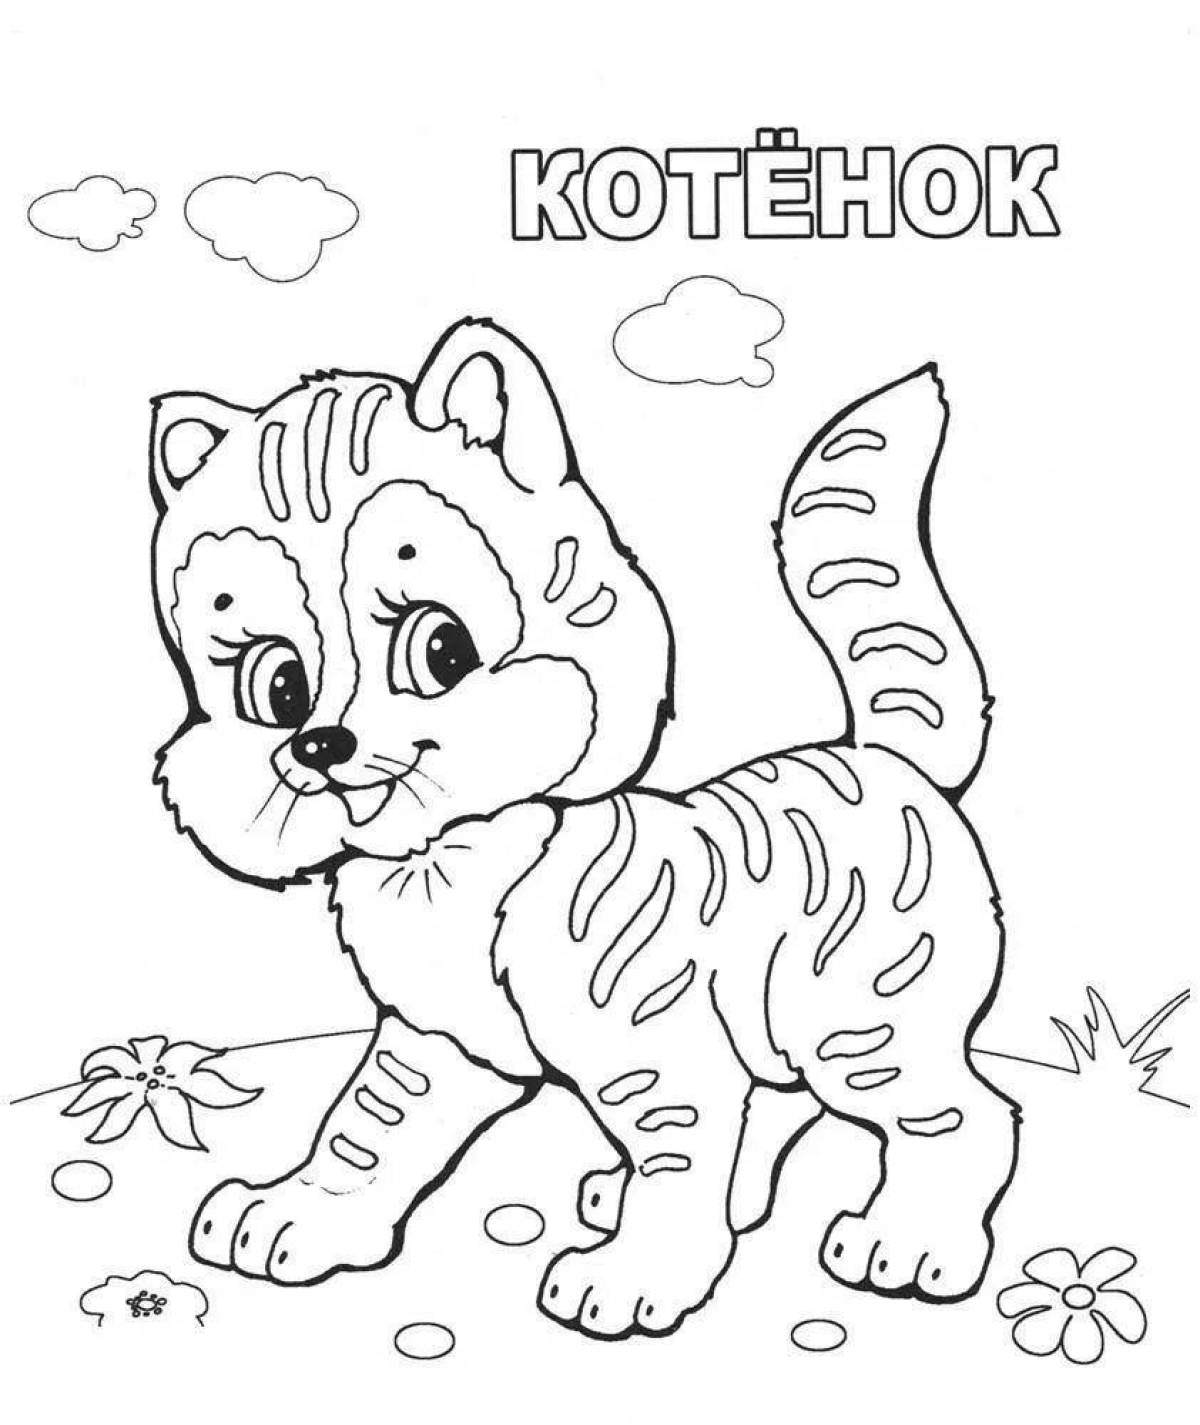 Adorable tabby kitten coloring book